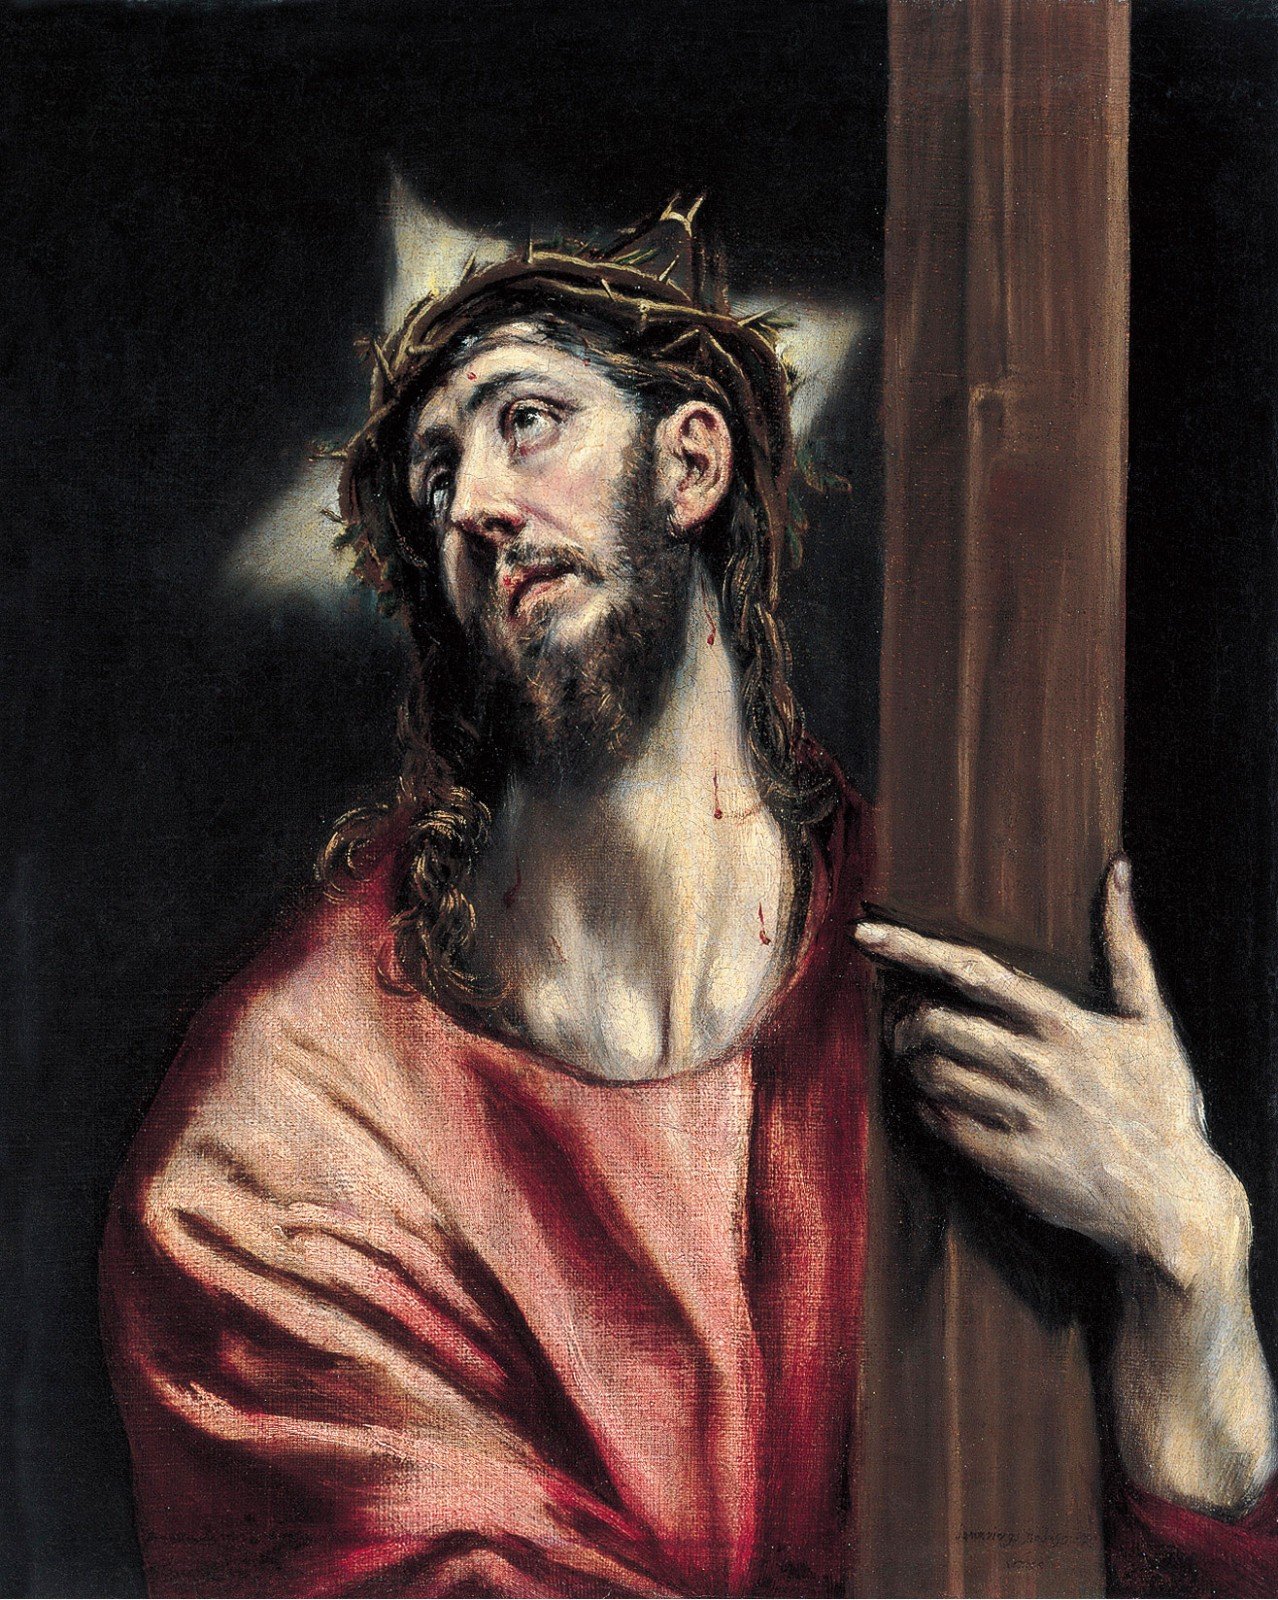 El Greco, “Christ embraced the cross”, 1587-96, Museo Thyssen-Bornemisza